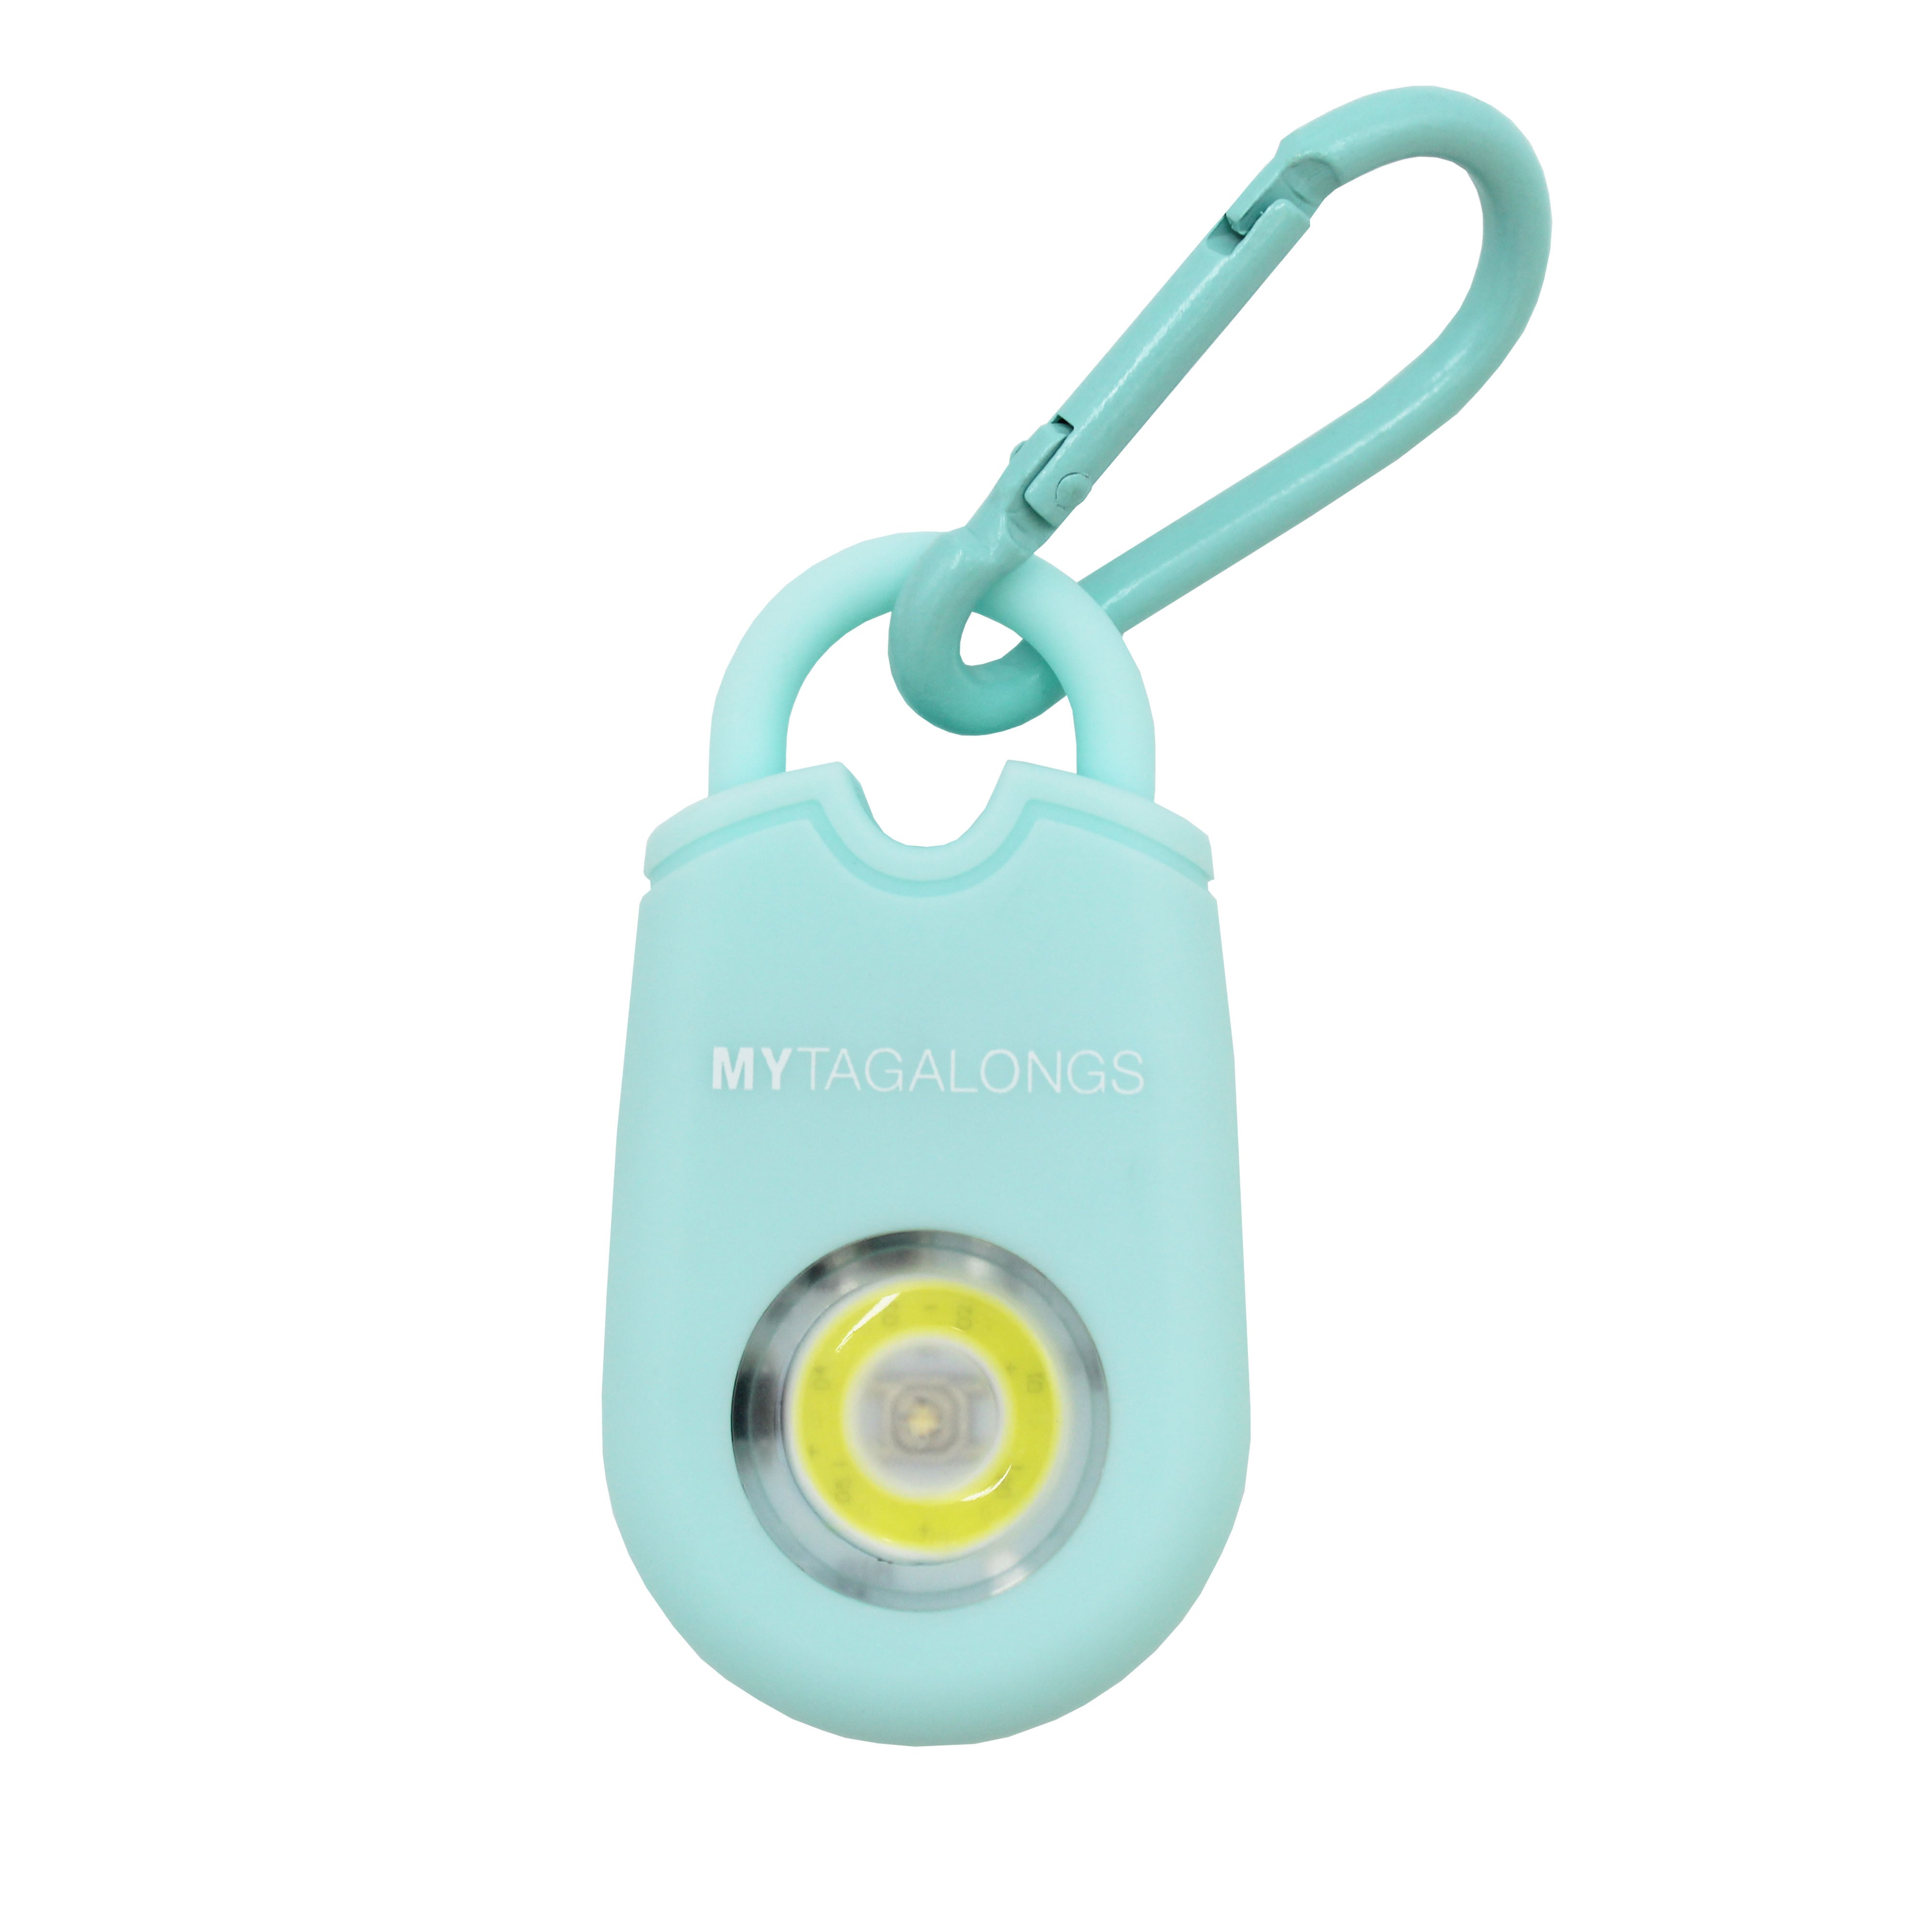 Mint Blue portable safety alarm keychain